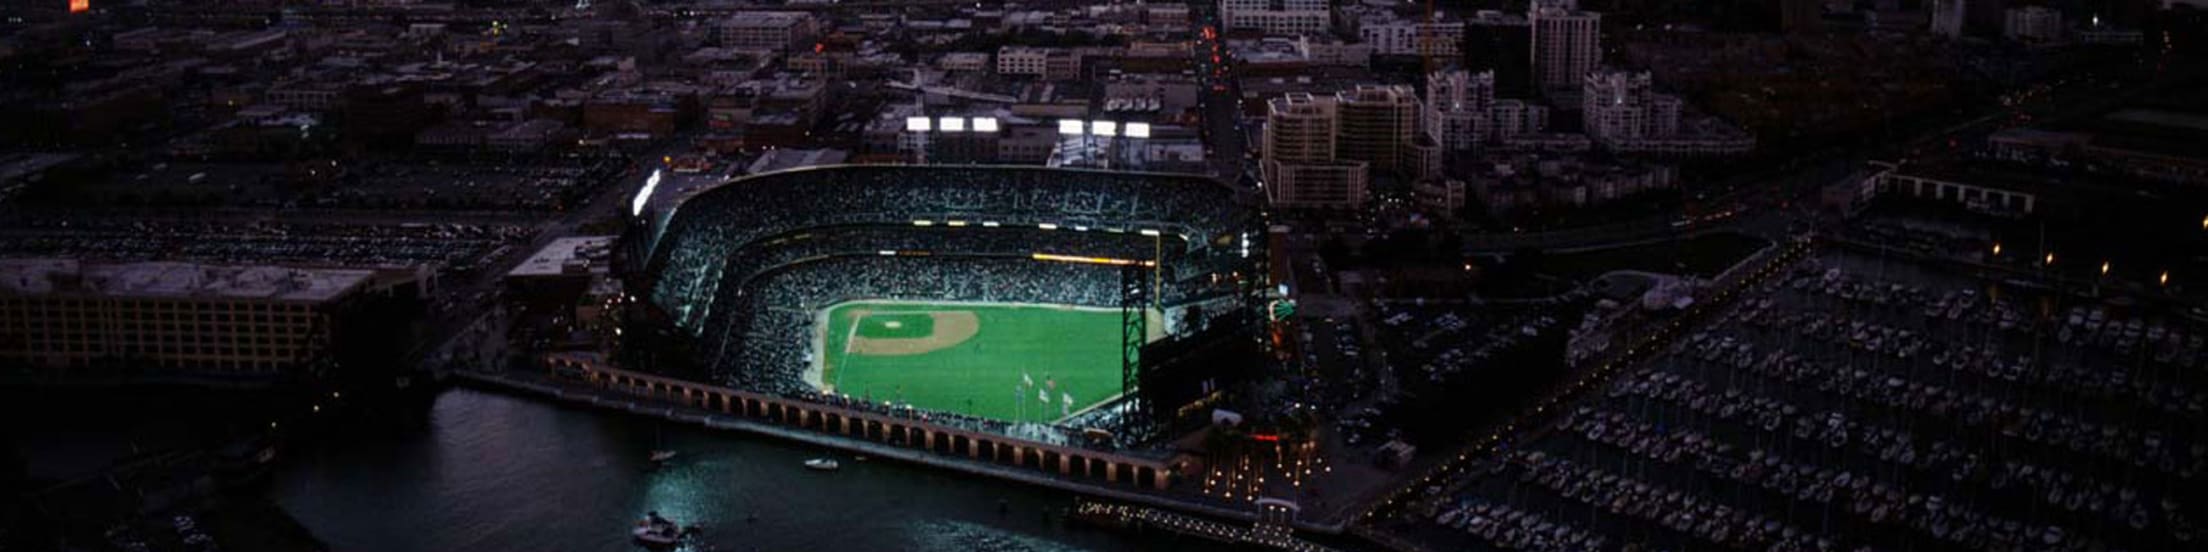 The San Francisco Giants Baseball Park - KCS West